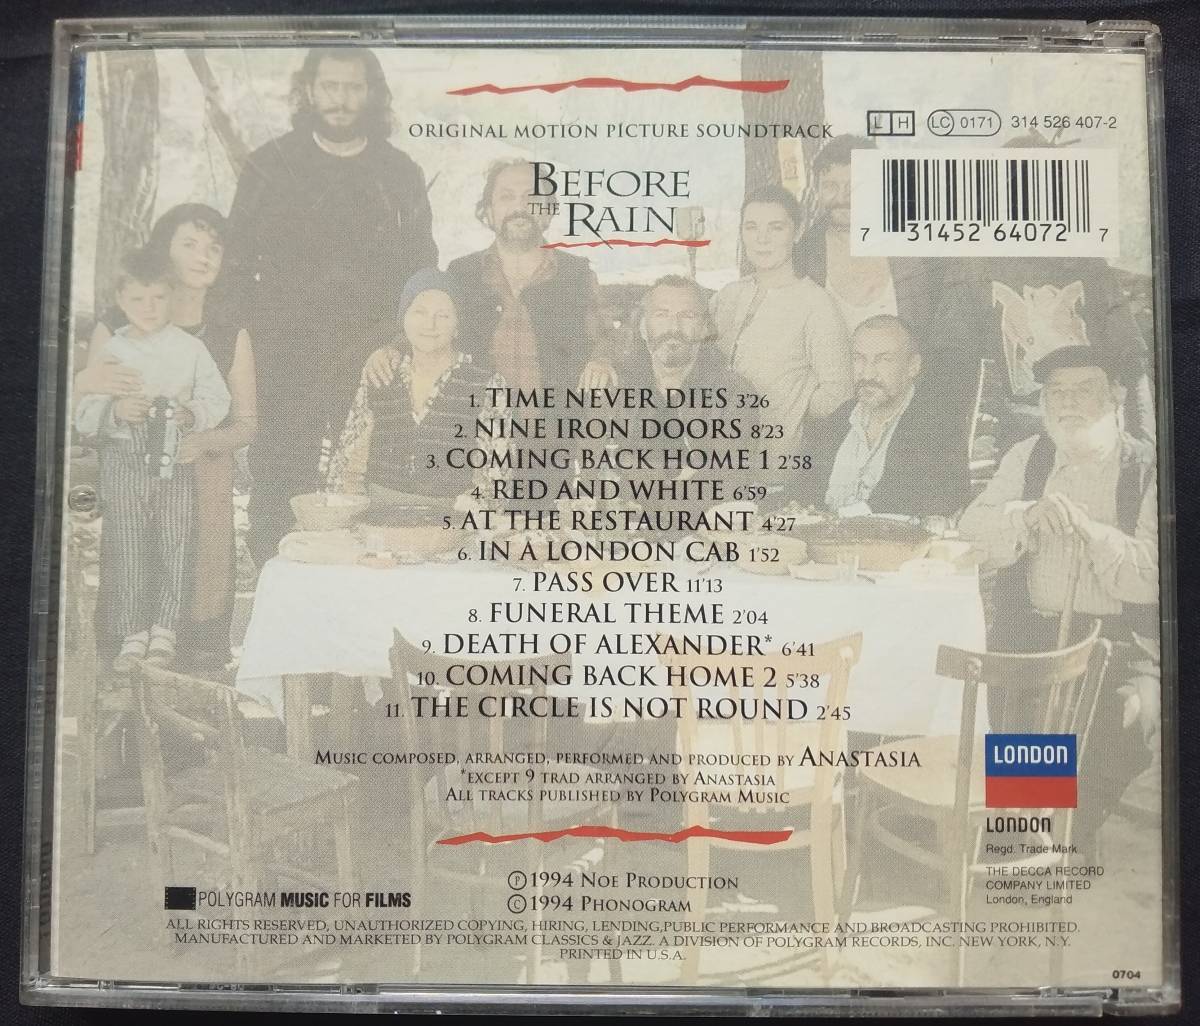 CD BEFORE THE RAIN SOUNDTRACK 314 526 407-2 ビフォア・ザ・レイン サウンドトラック ANASTASIA アナスタシア LAZAROVA DAUTOVSKI TOSIC_画像2